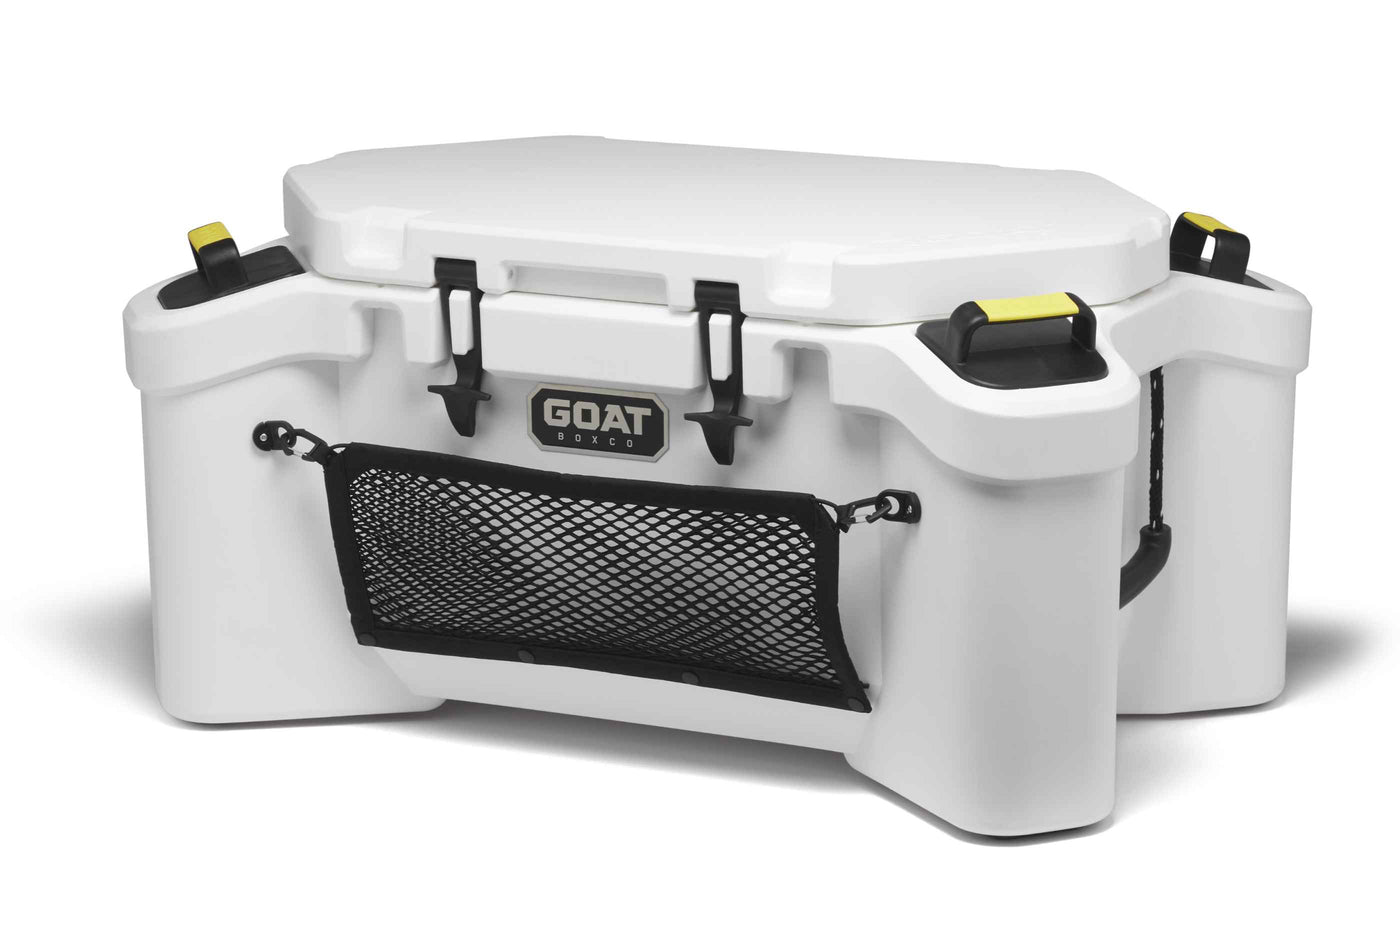 The HUB 70 - GOAT Box Co. HUB 70 Cooler System